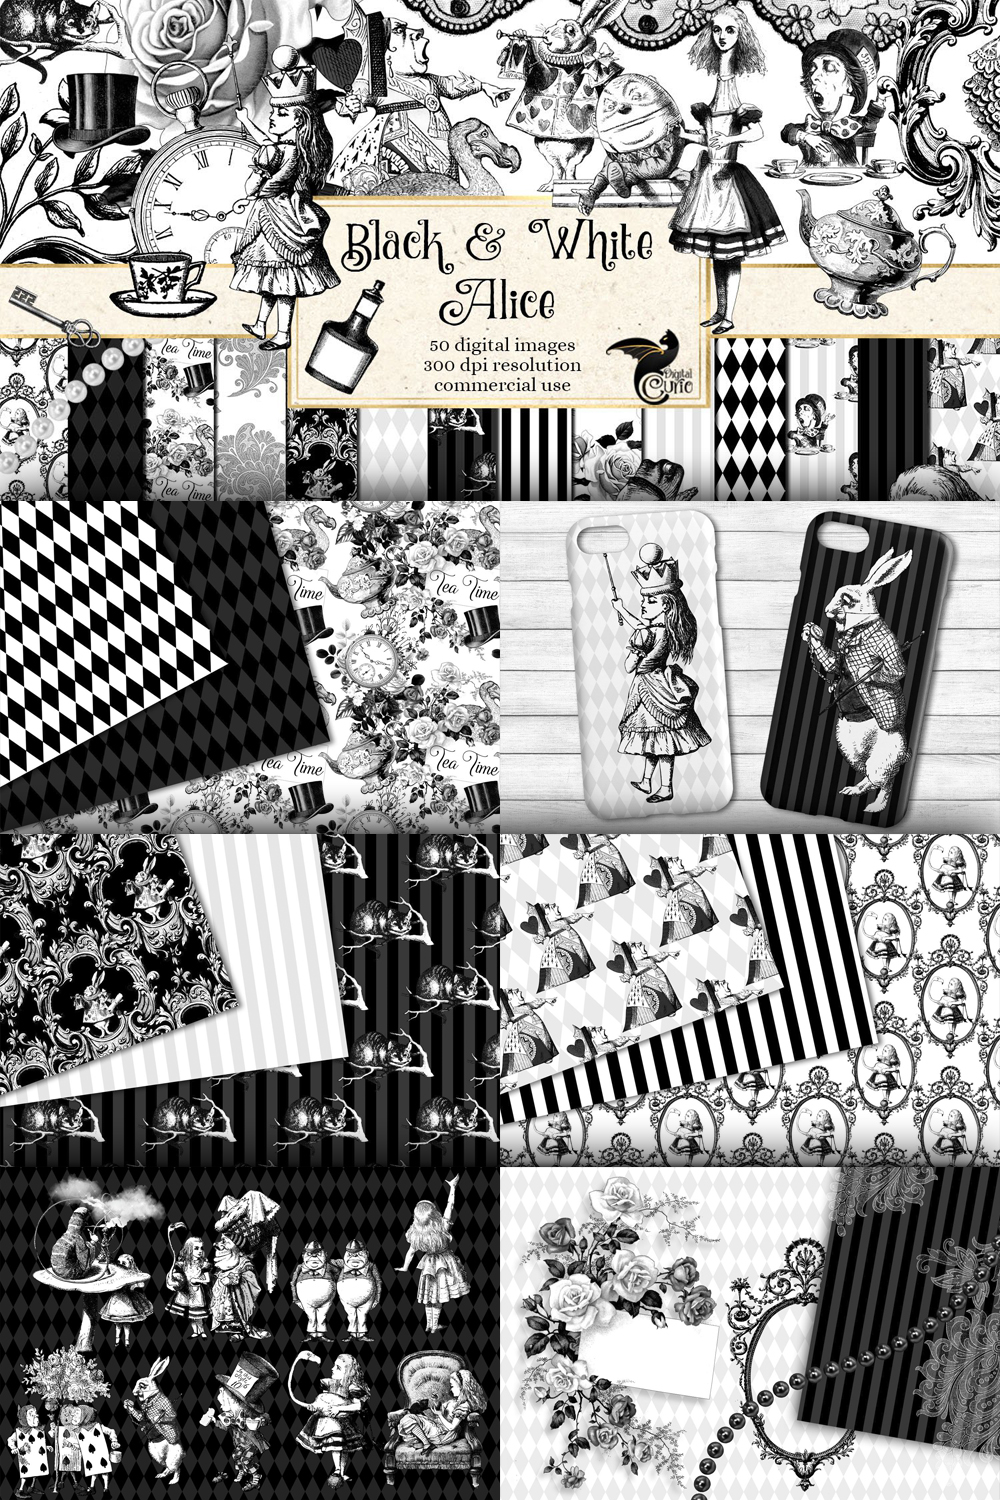 Black and white alice in wonderland graphics of pinterest.